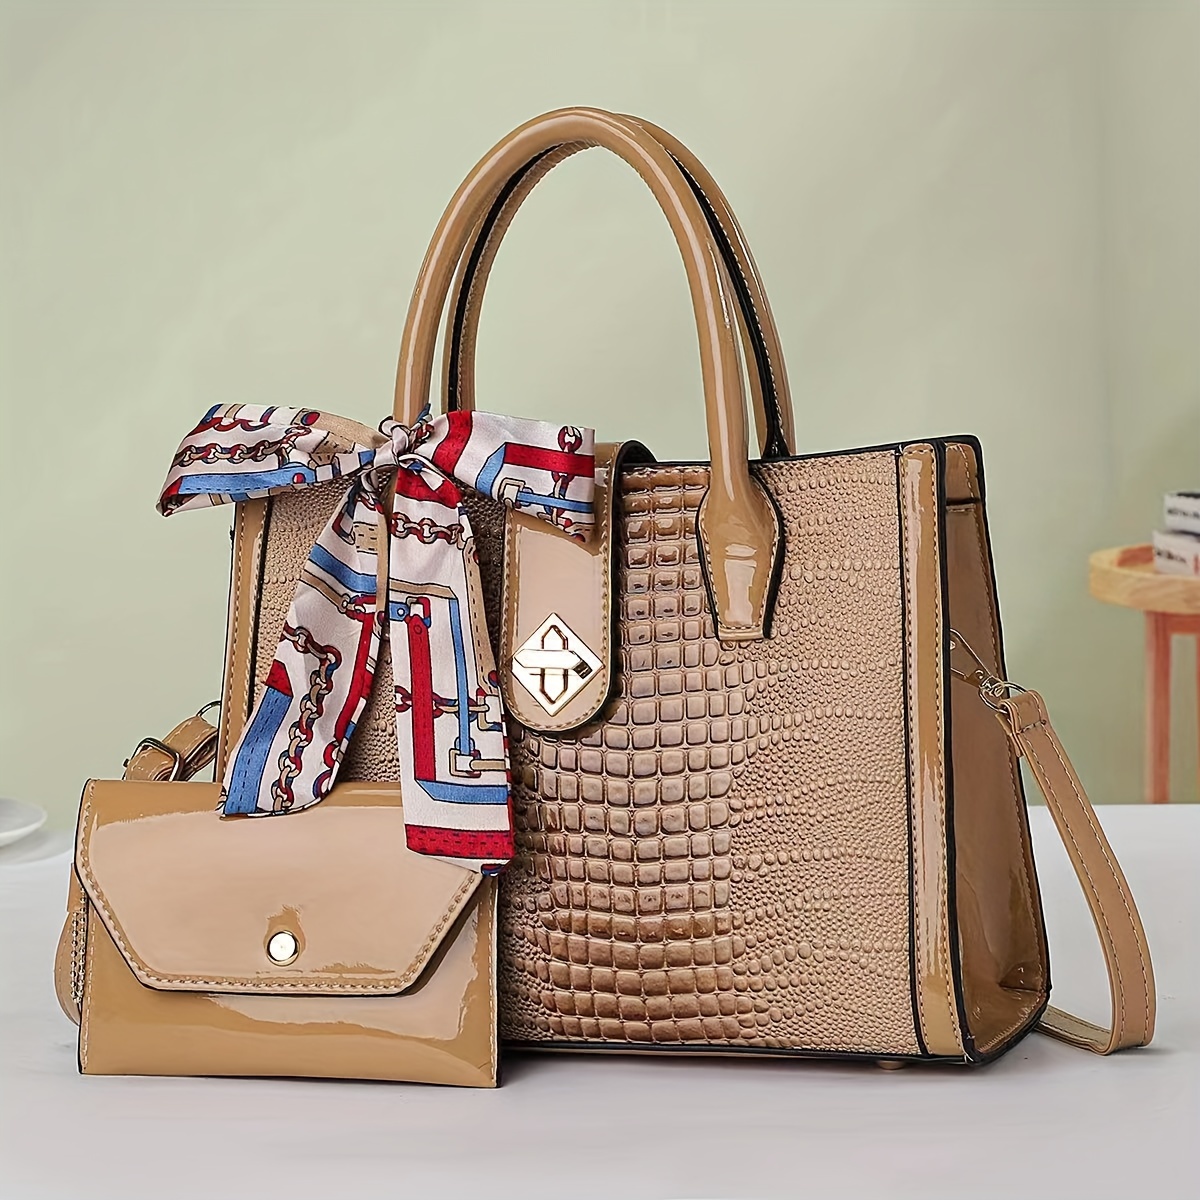 Purses and Handbags for Women Satchel Fashion Ladies Top Handle Shoulder Tote Bags